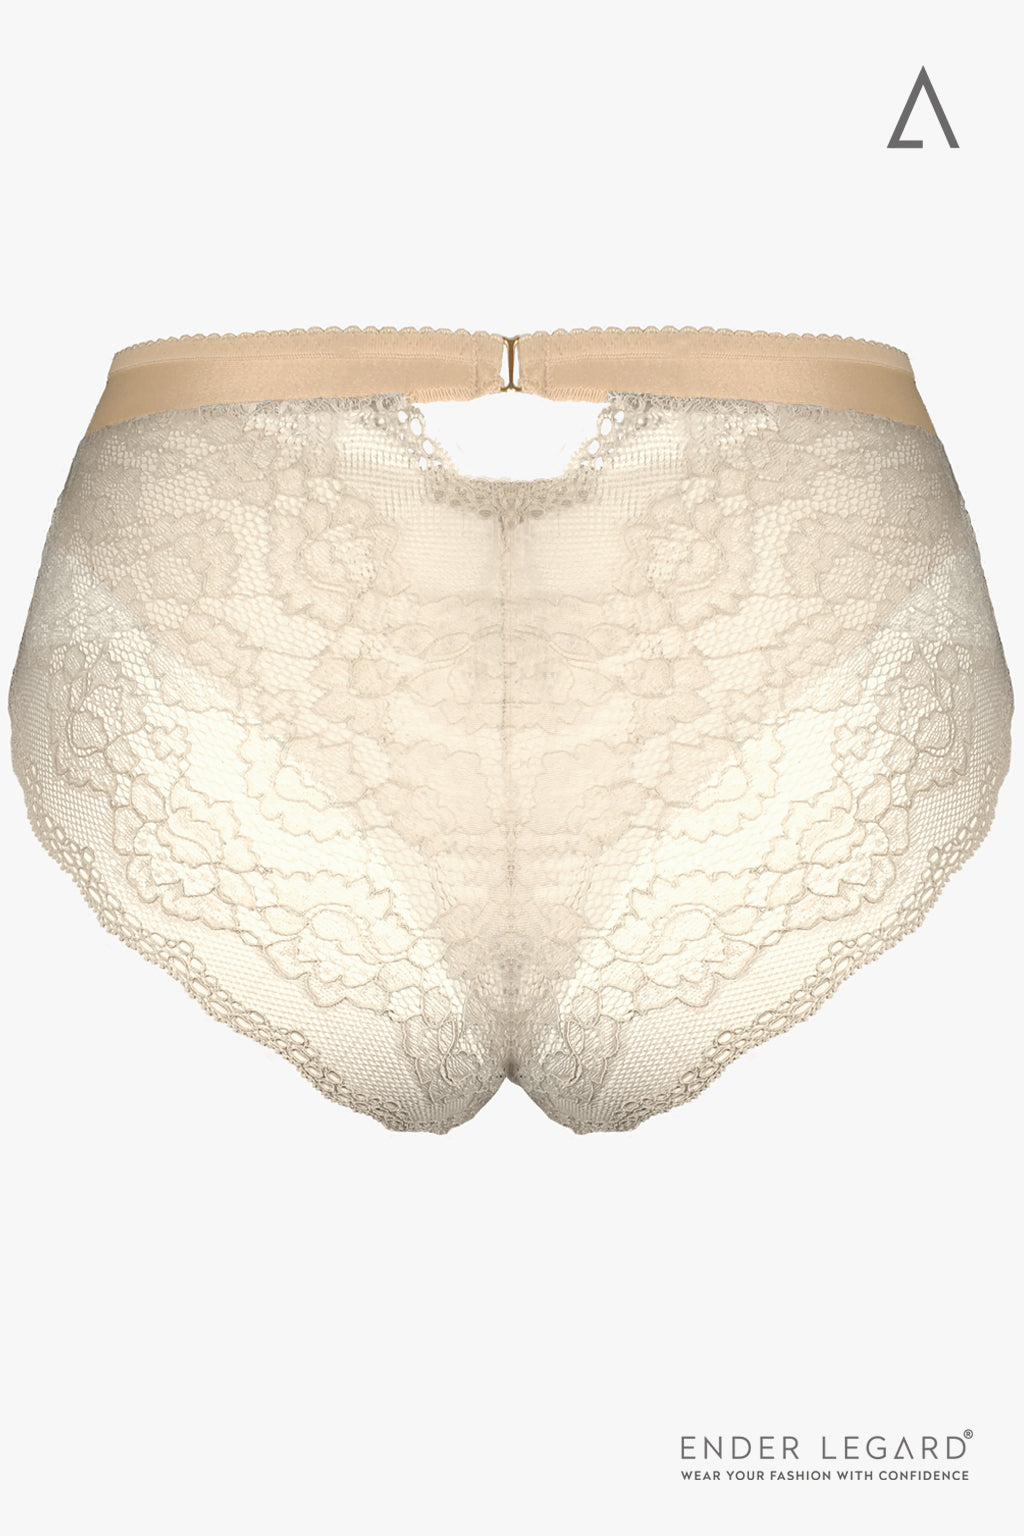 Lace panties briefs for ivory bodysuit shaper | ENDER LEGARD